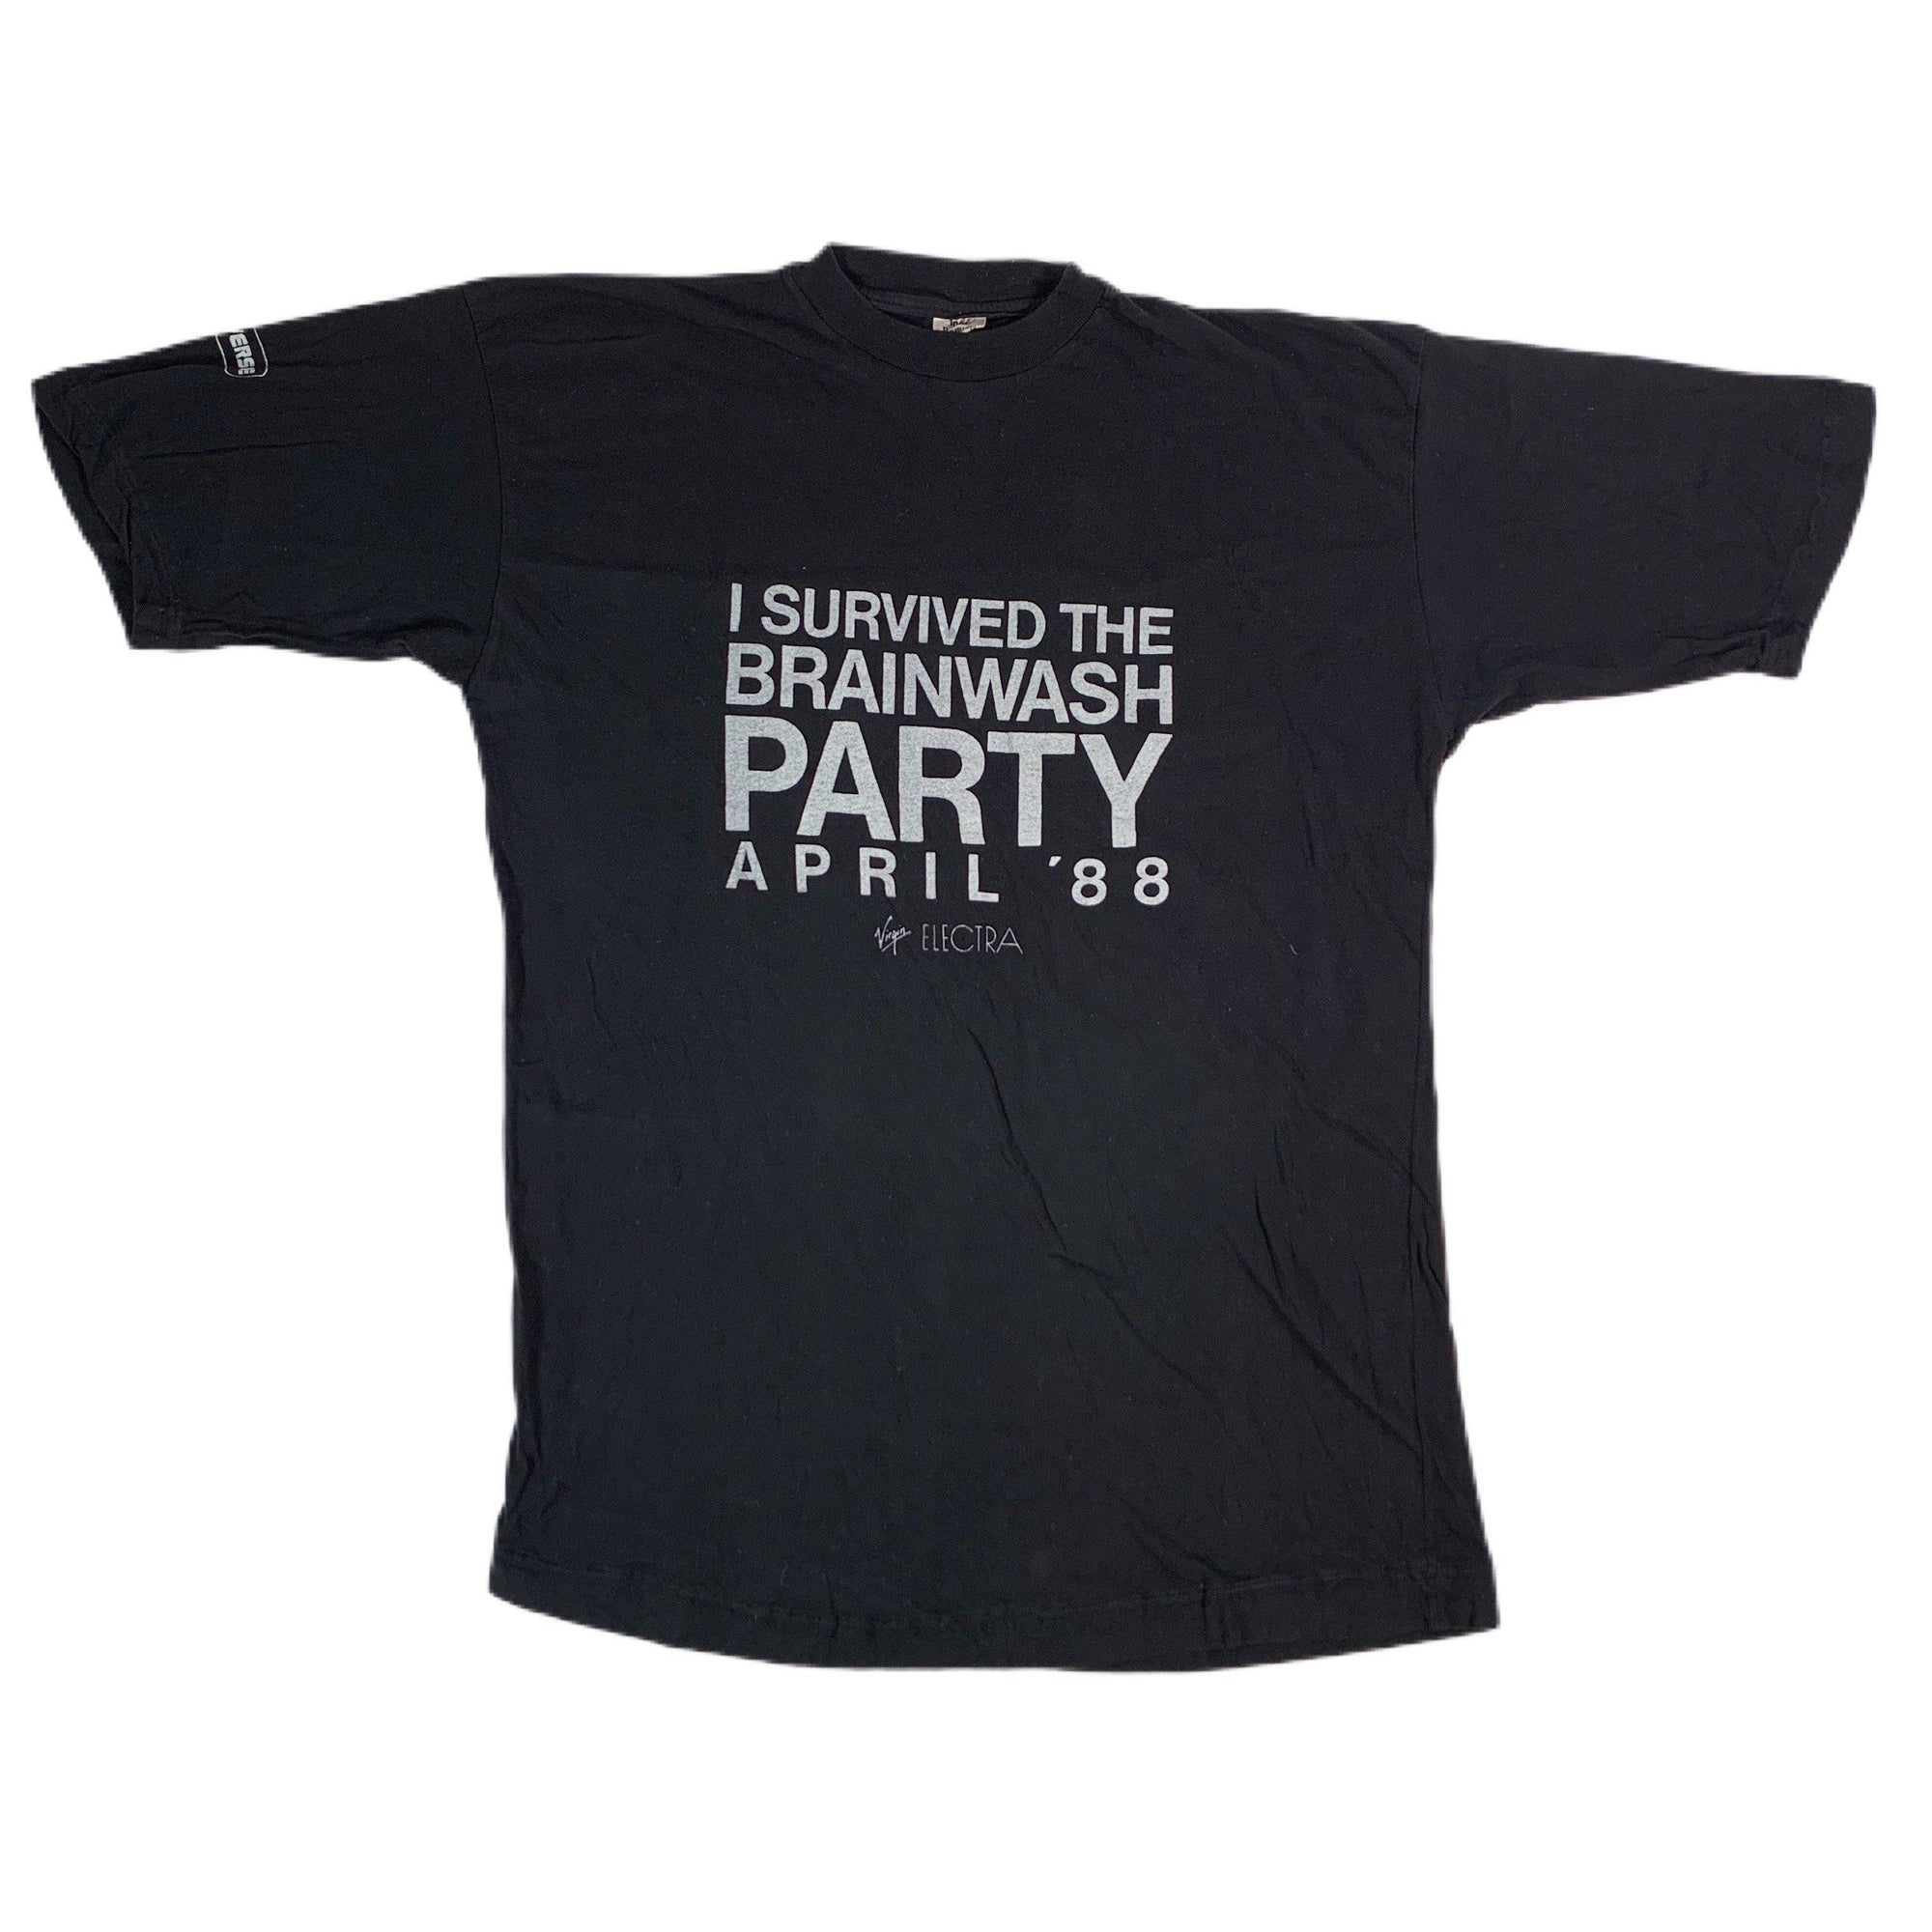 Vintage Converse Virgin Records "Brainwash Party" T-Shirt - jointcustodydc